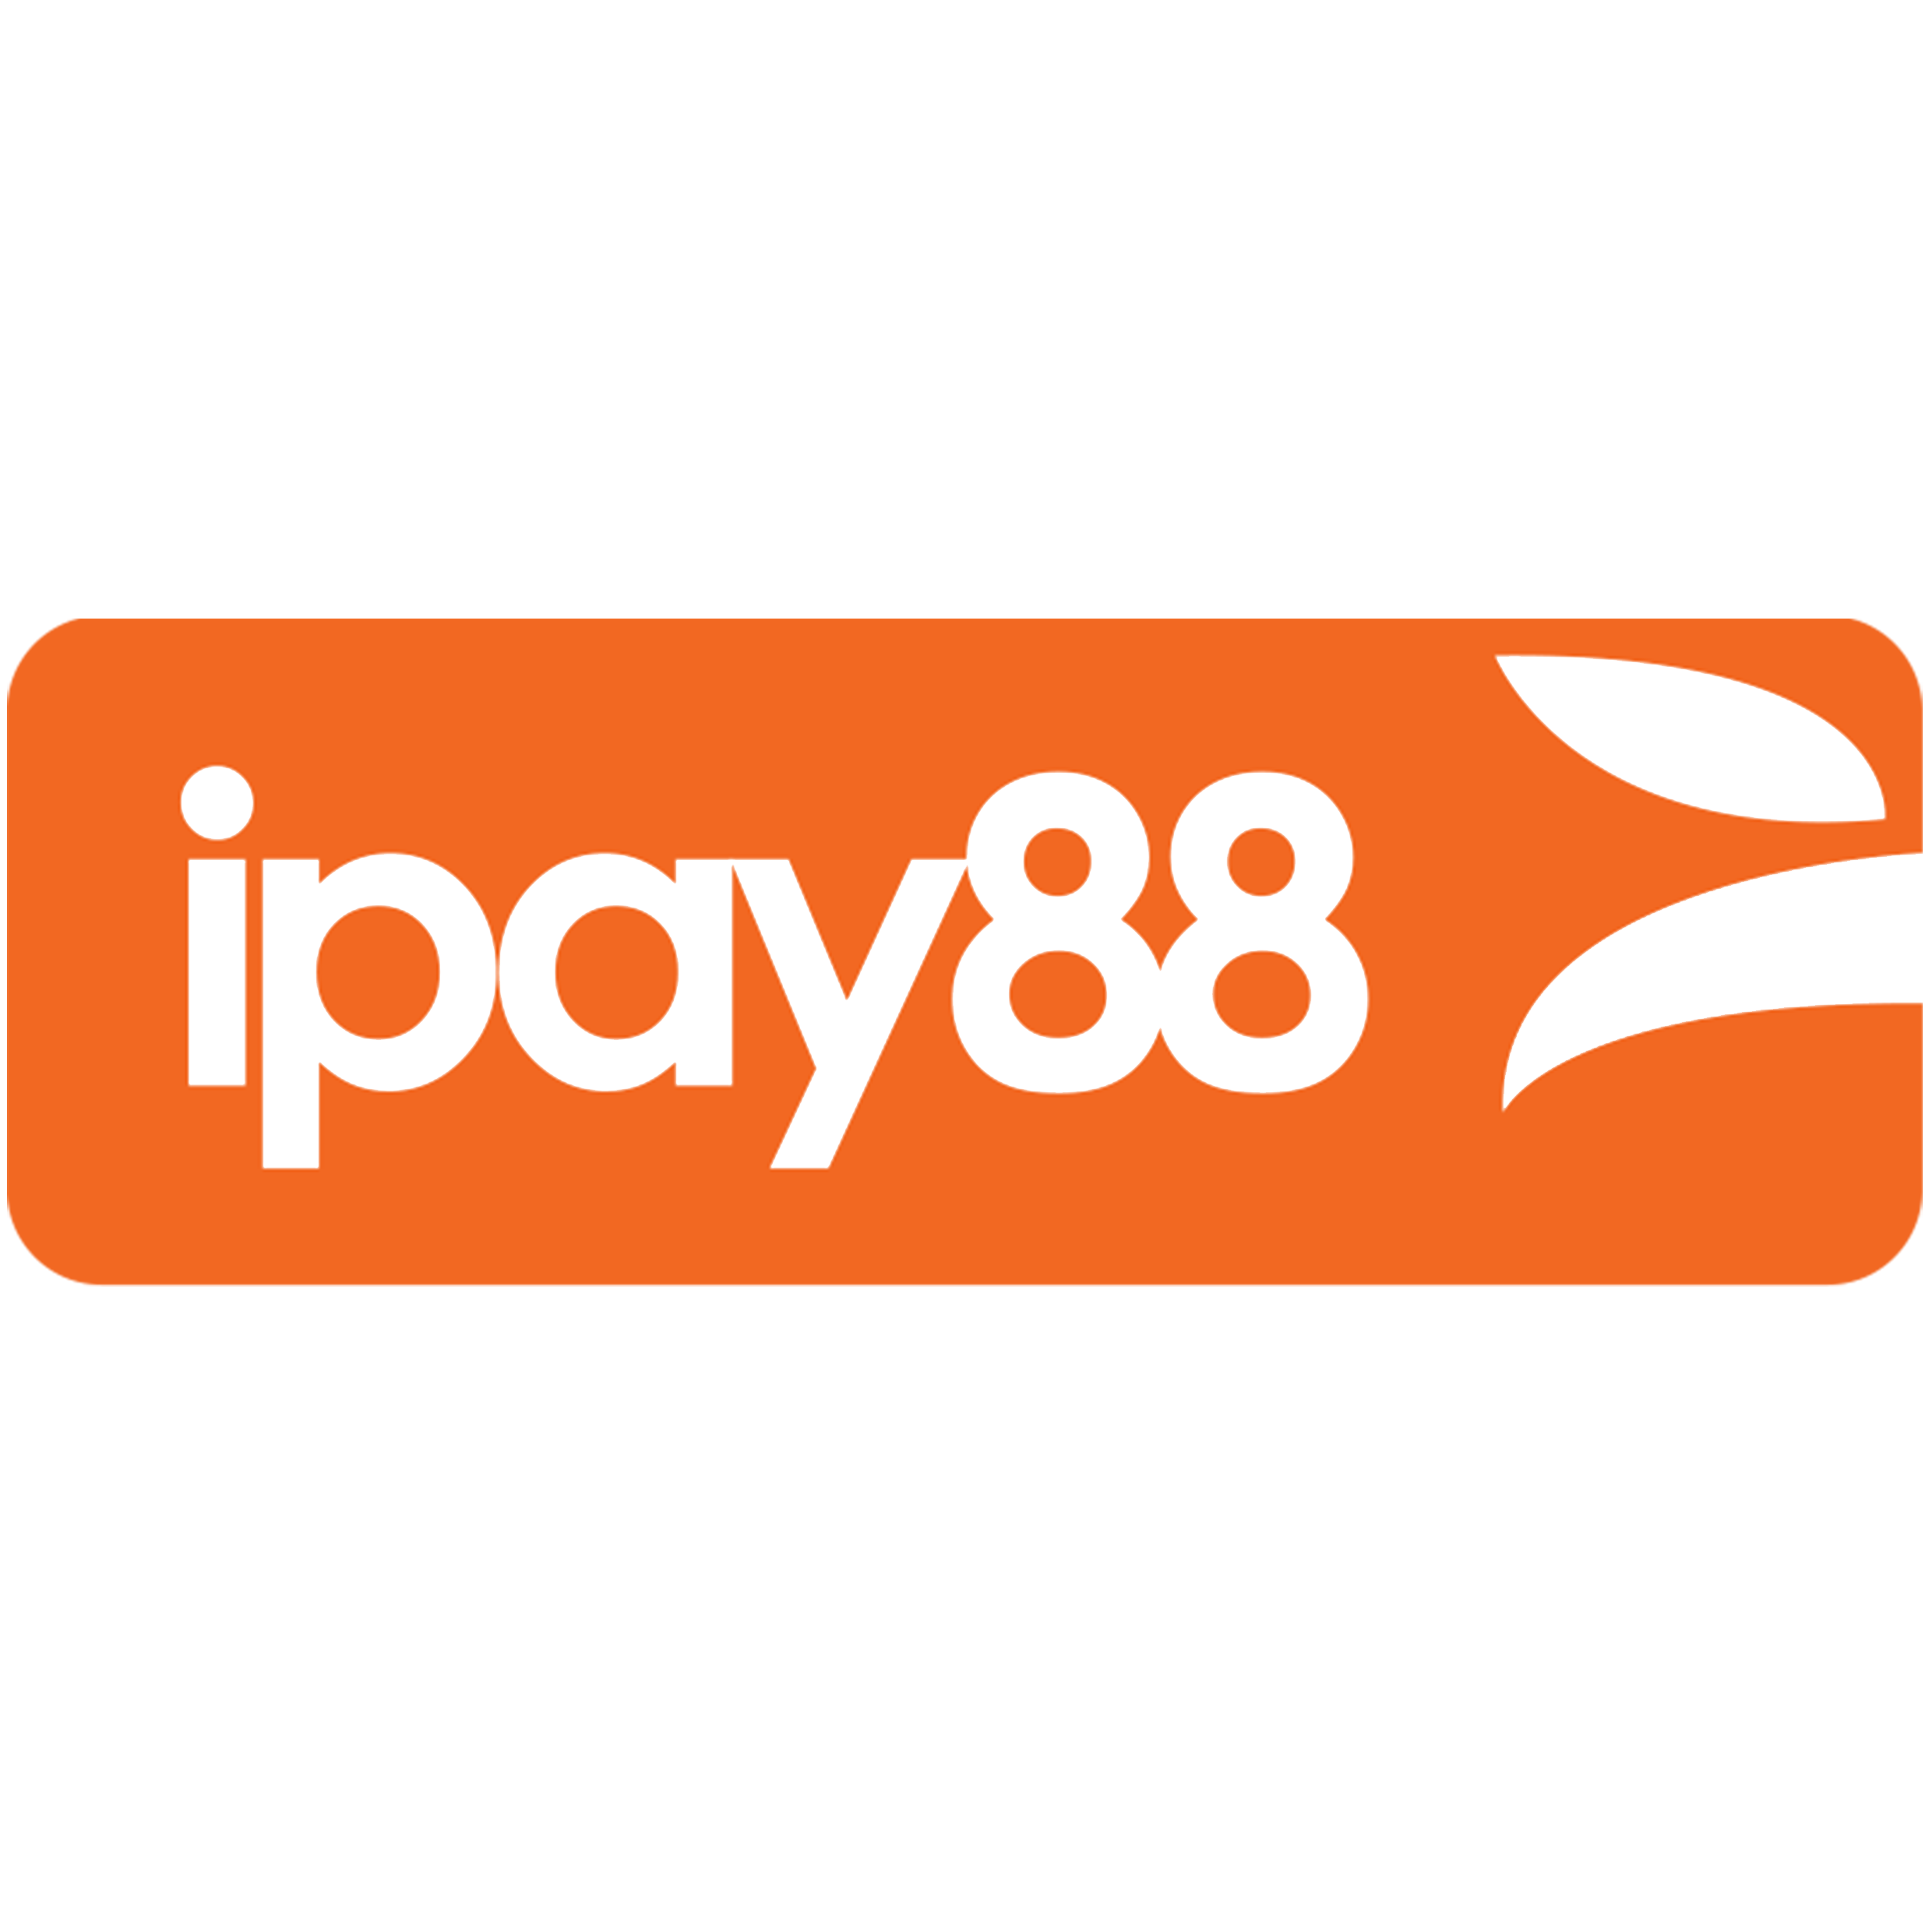 ipay88-1